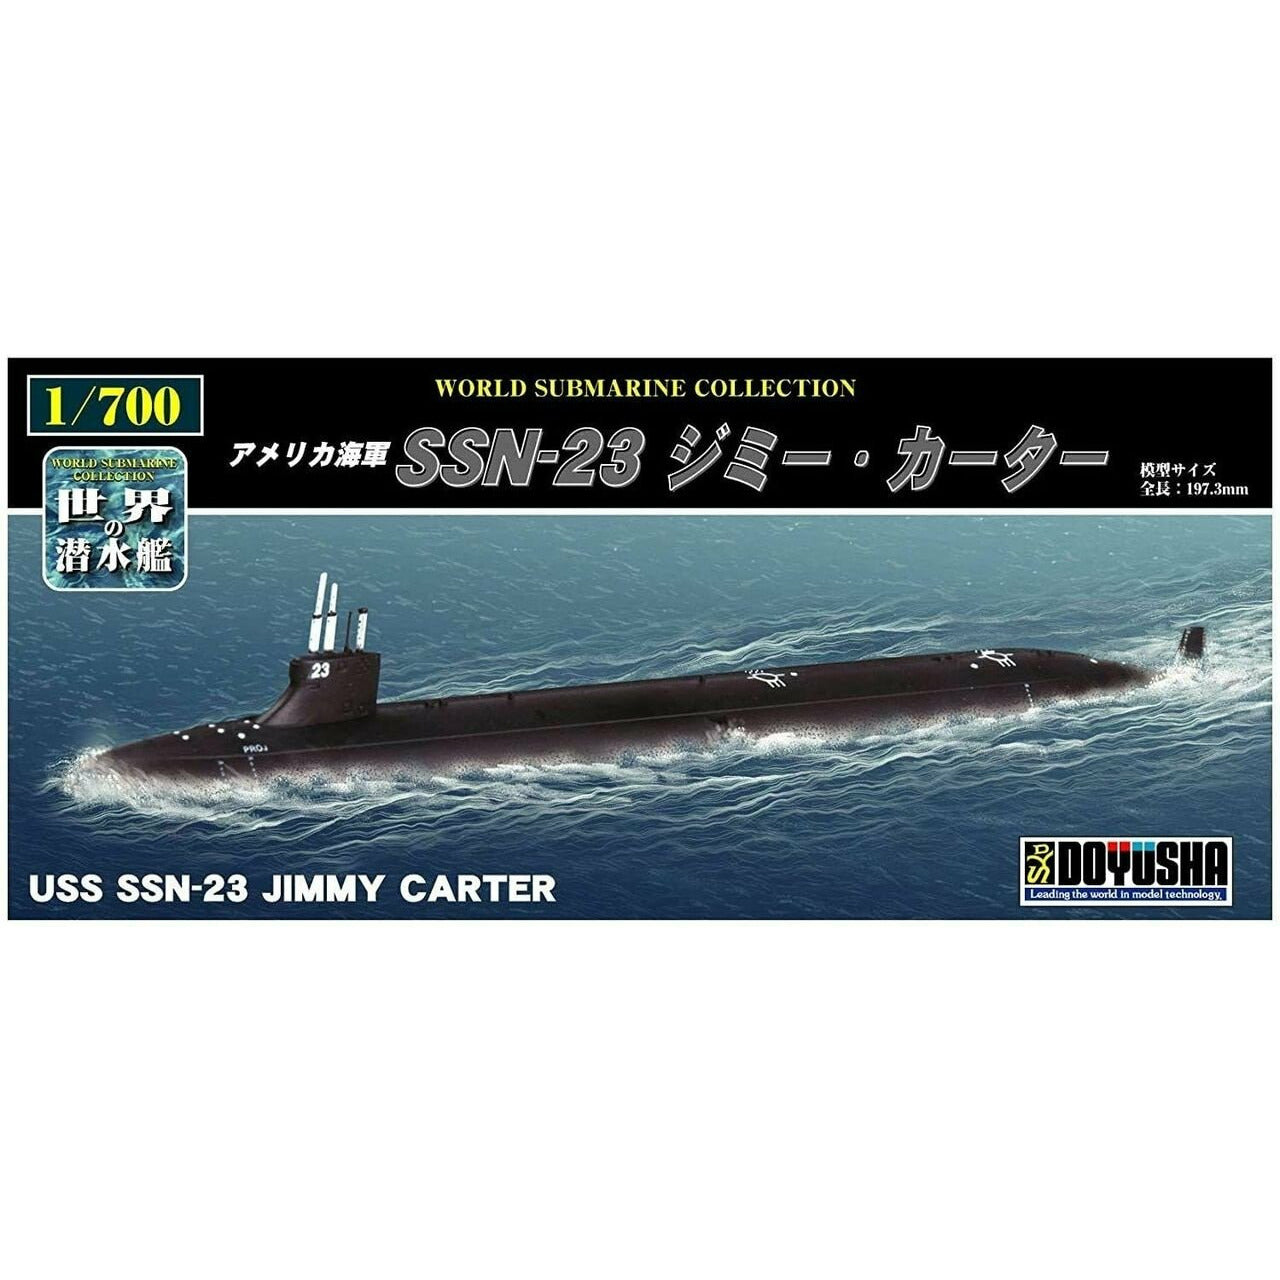 SSN-23 Jimmy Carter Attack Submarine 1/700 Model Submarine Kit #1200-4 by Doyusha